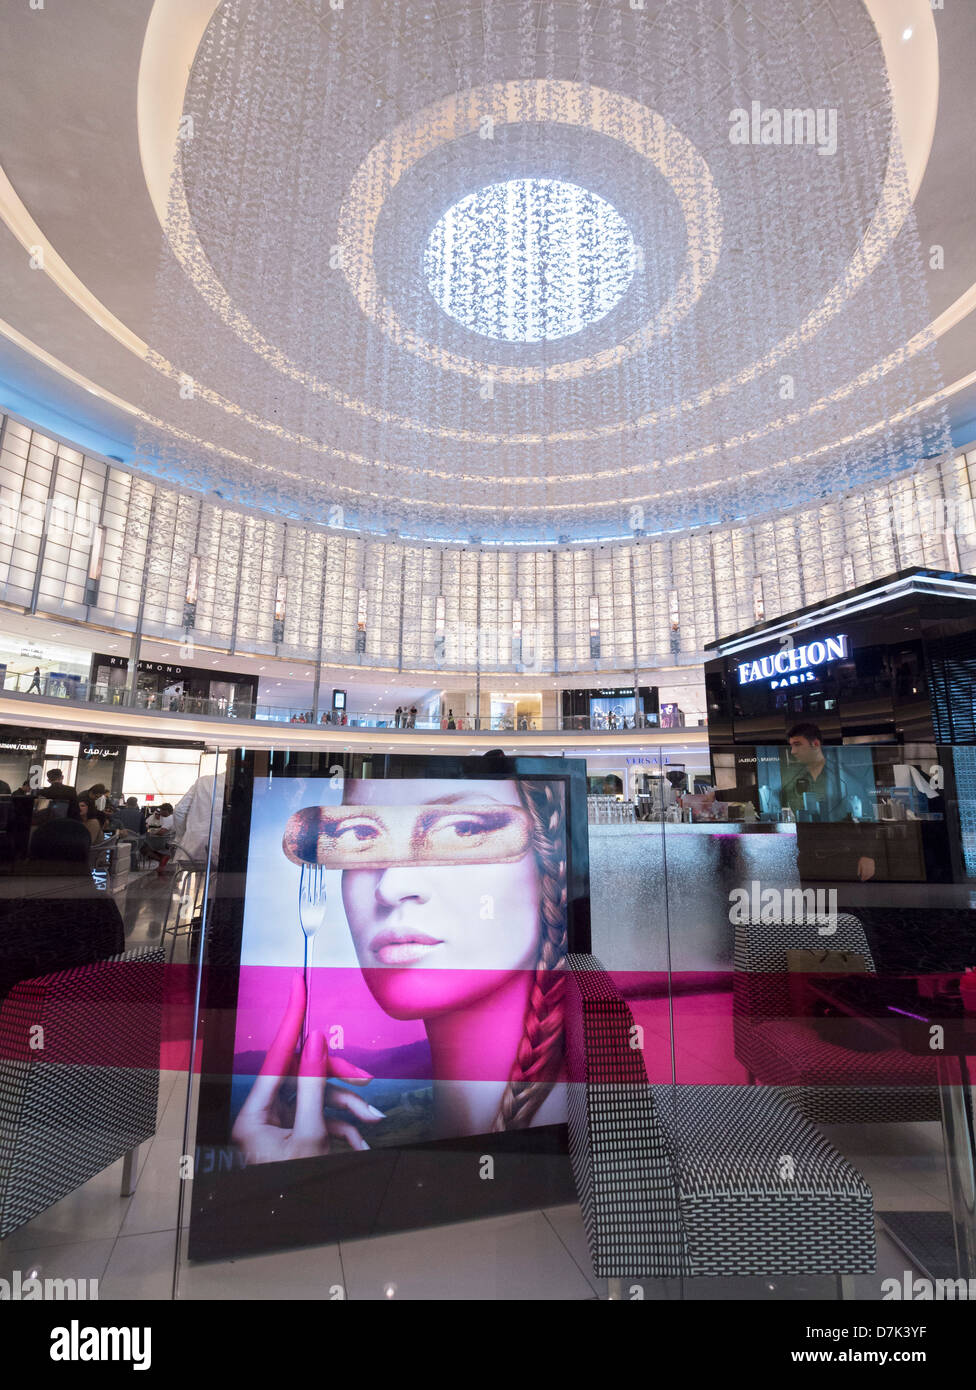 Fauchon gehobenen Café in der Dubai Mall in Dubai Vereinigte Arabische Emirate Stockfoto